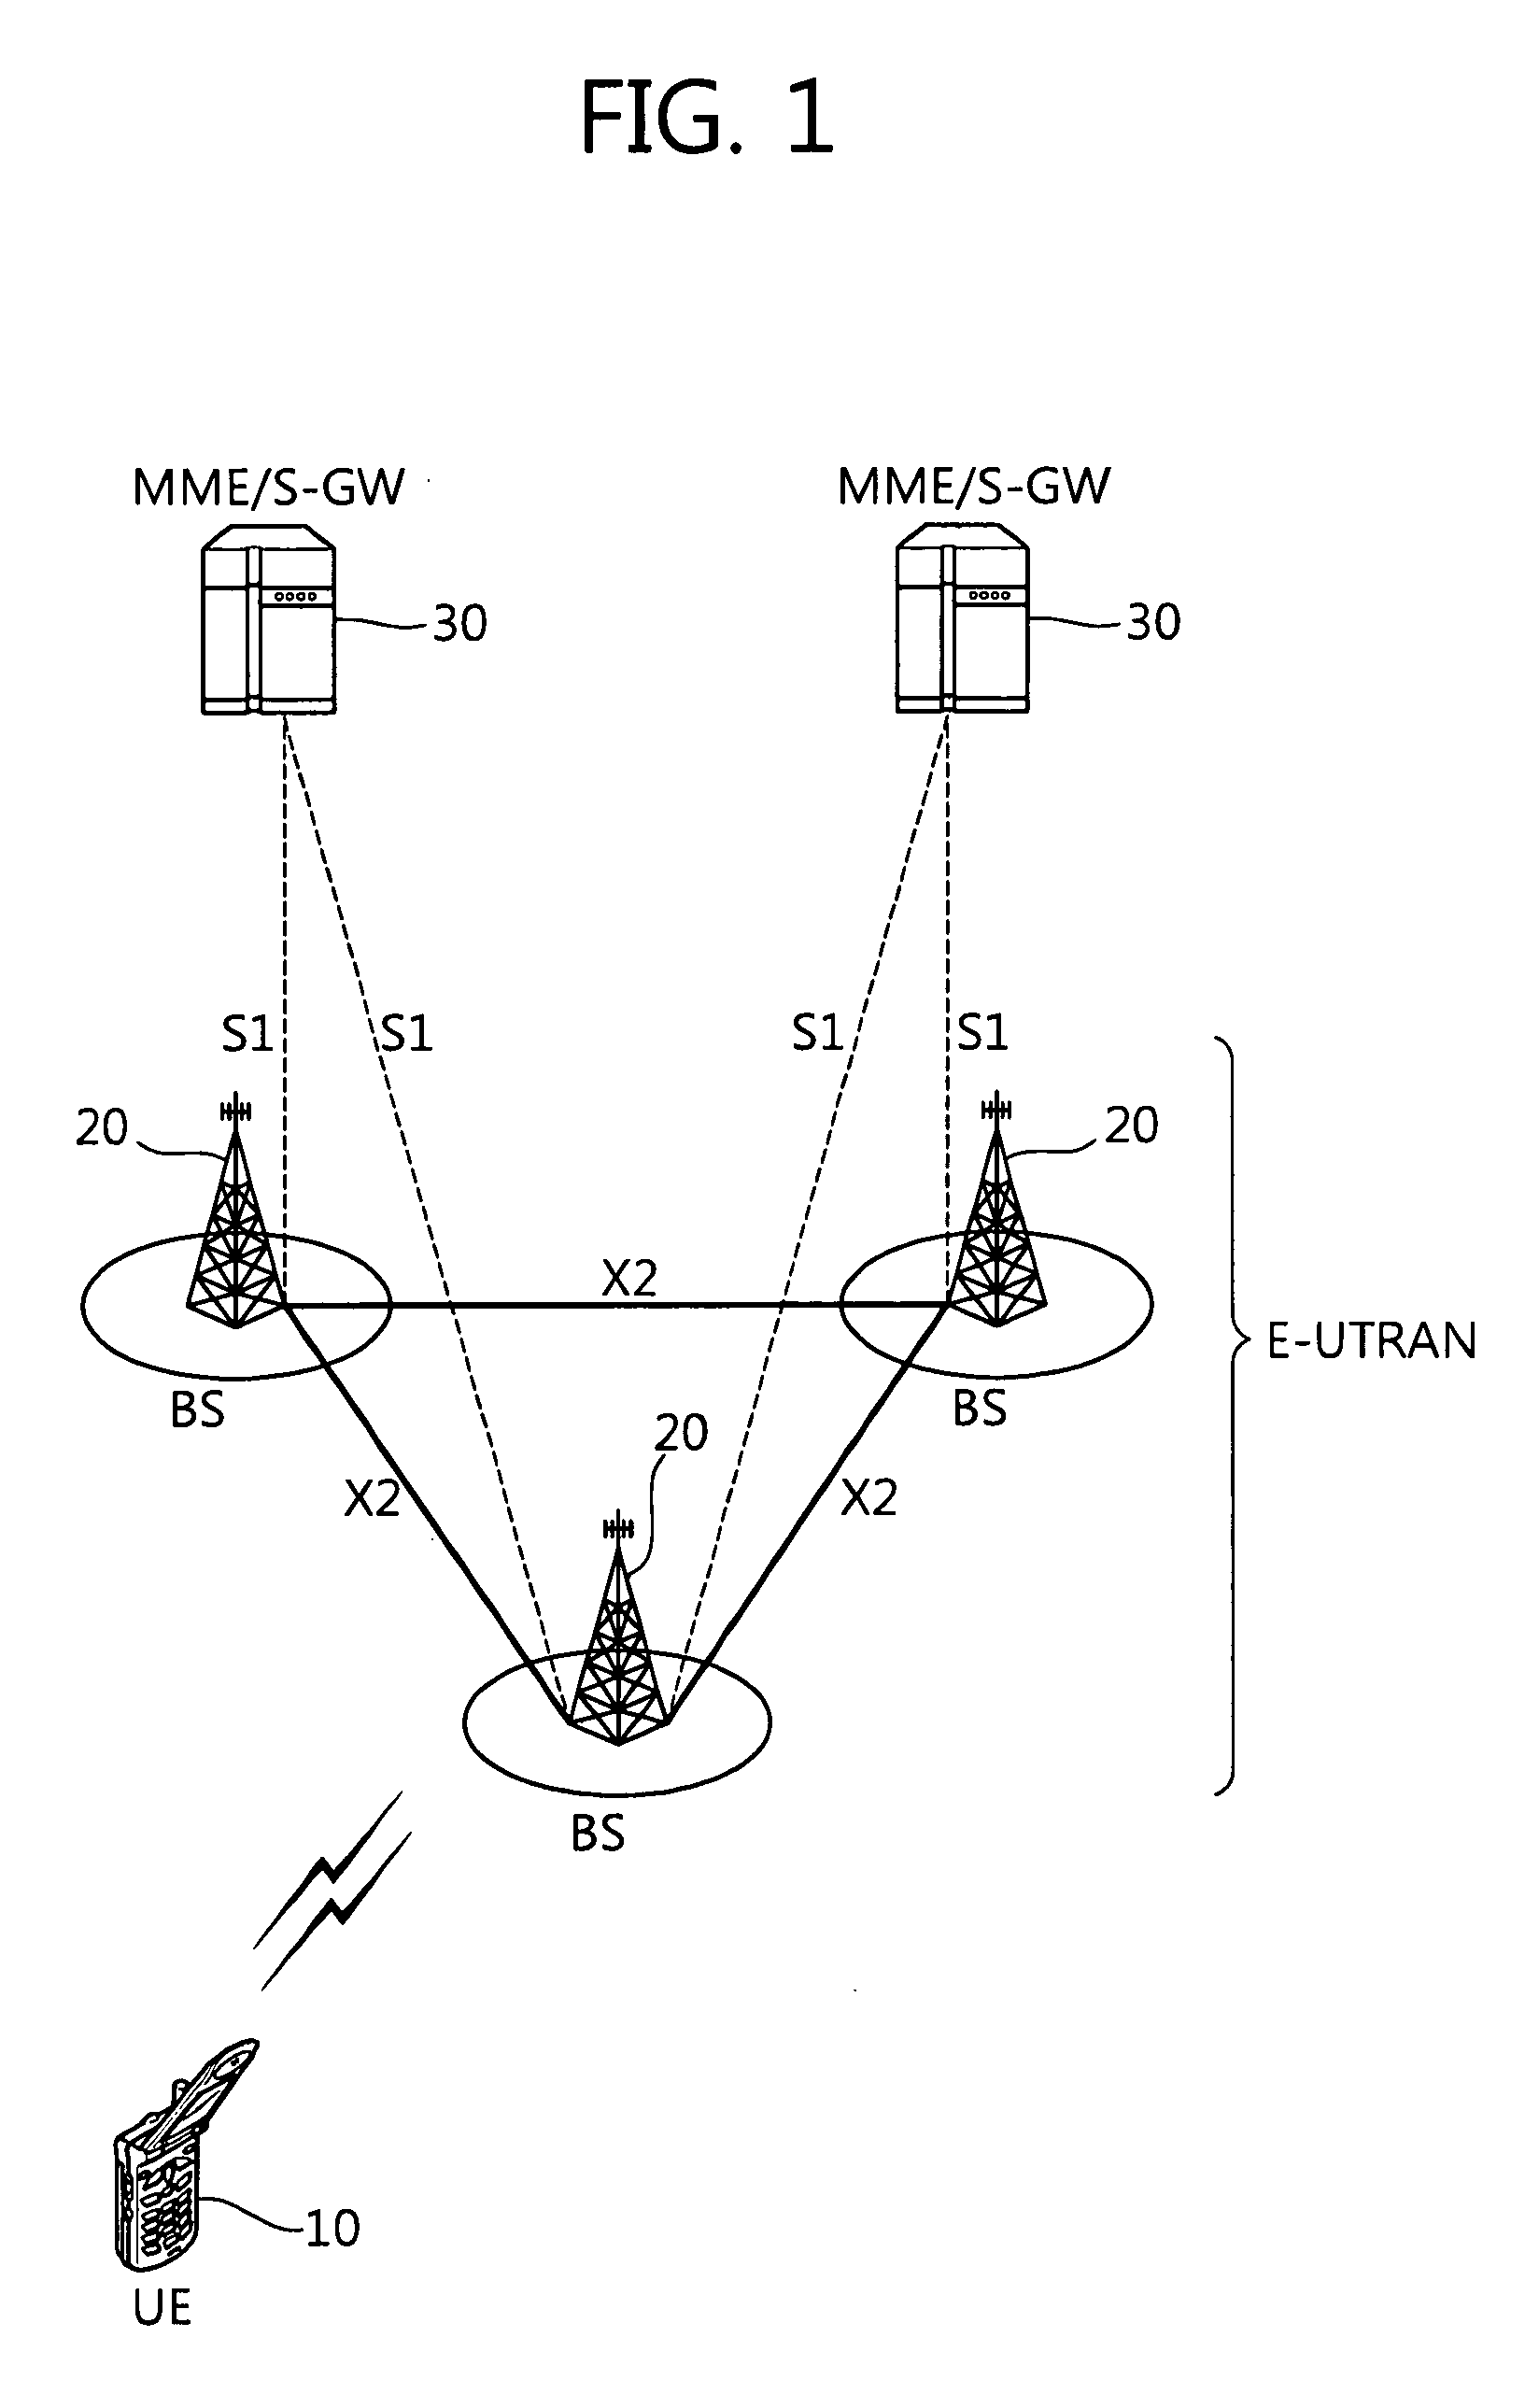 Method of controlling transmit power of uplink channel